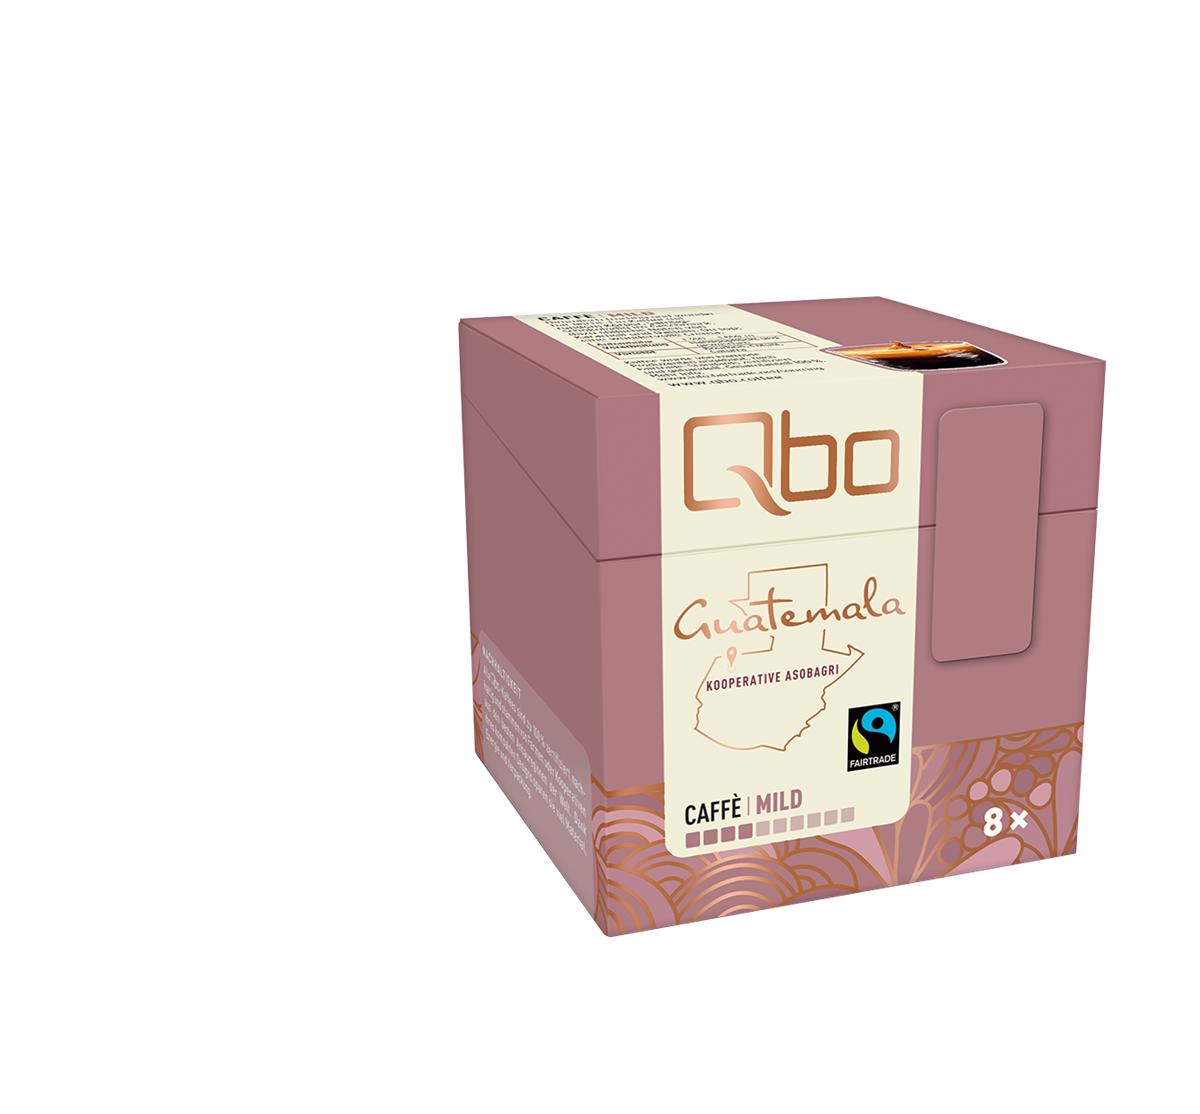 Qbo Limited Edition Guatemala_Caffè mild